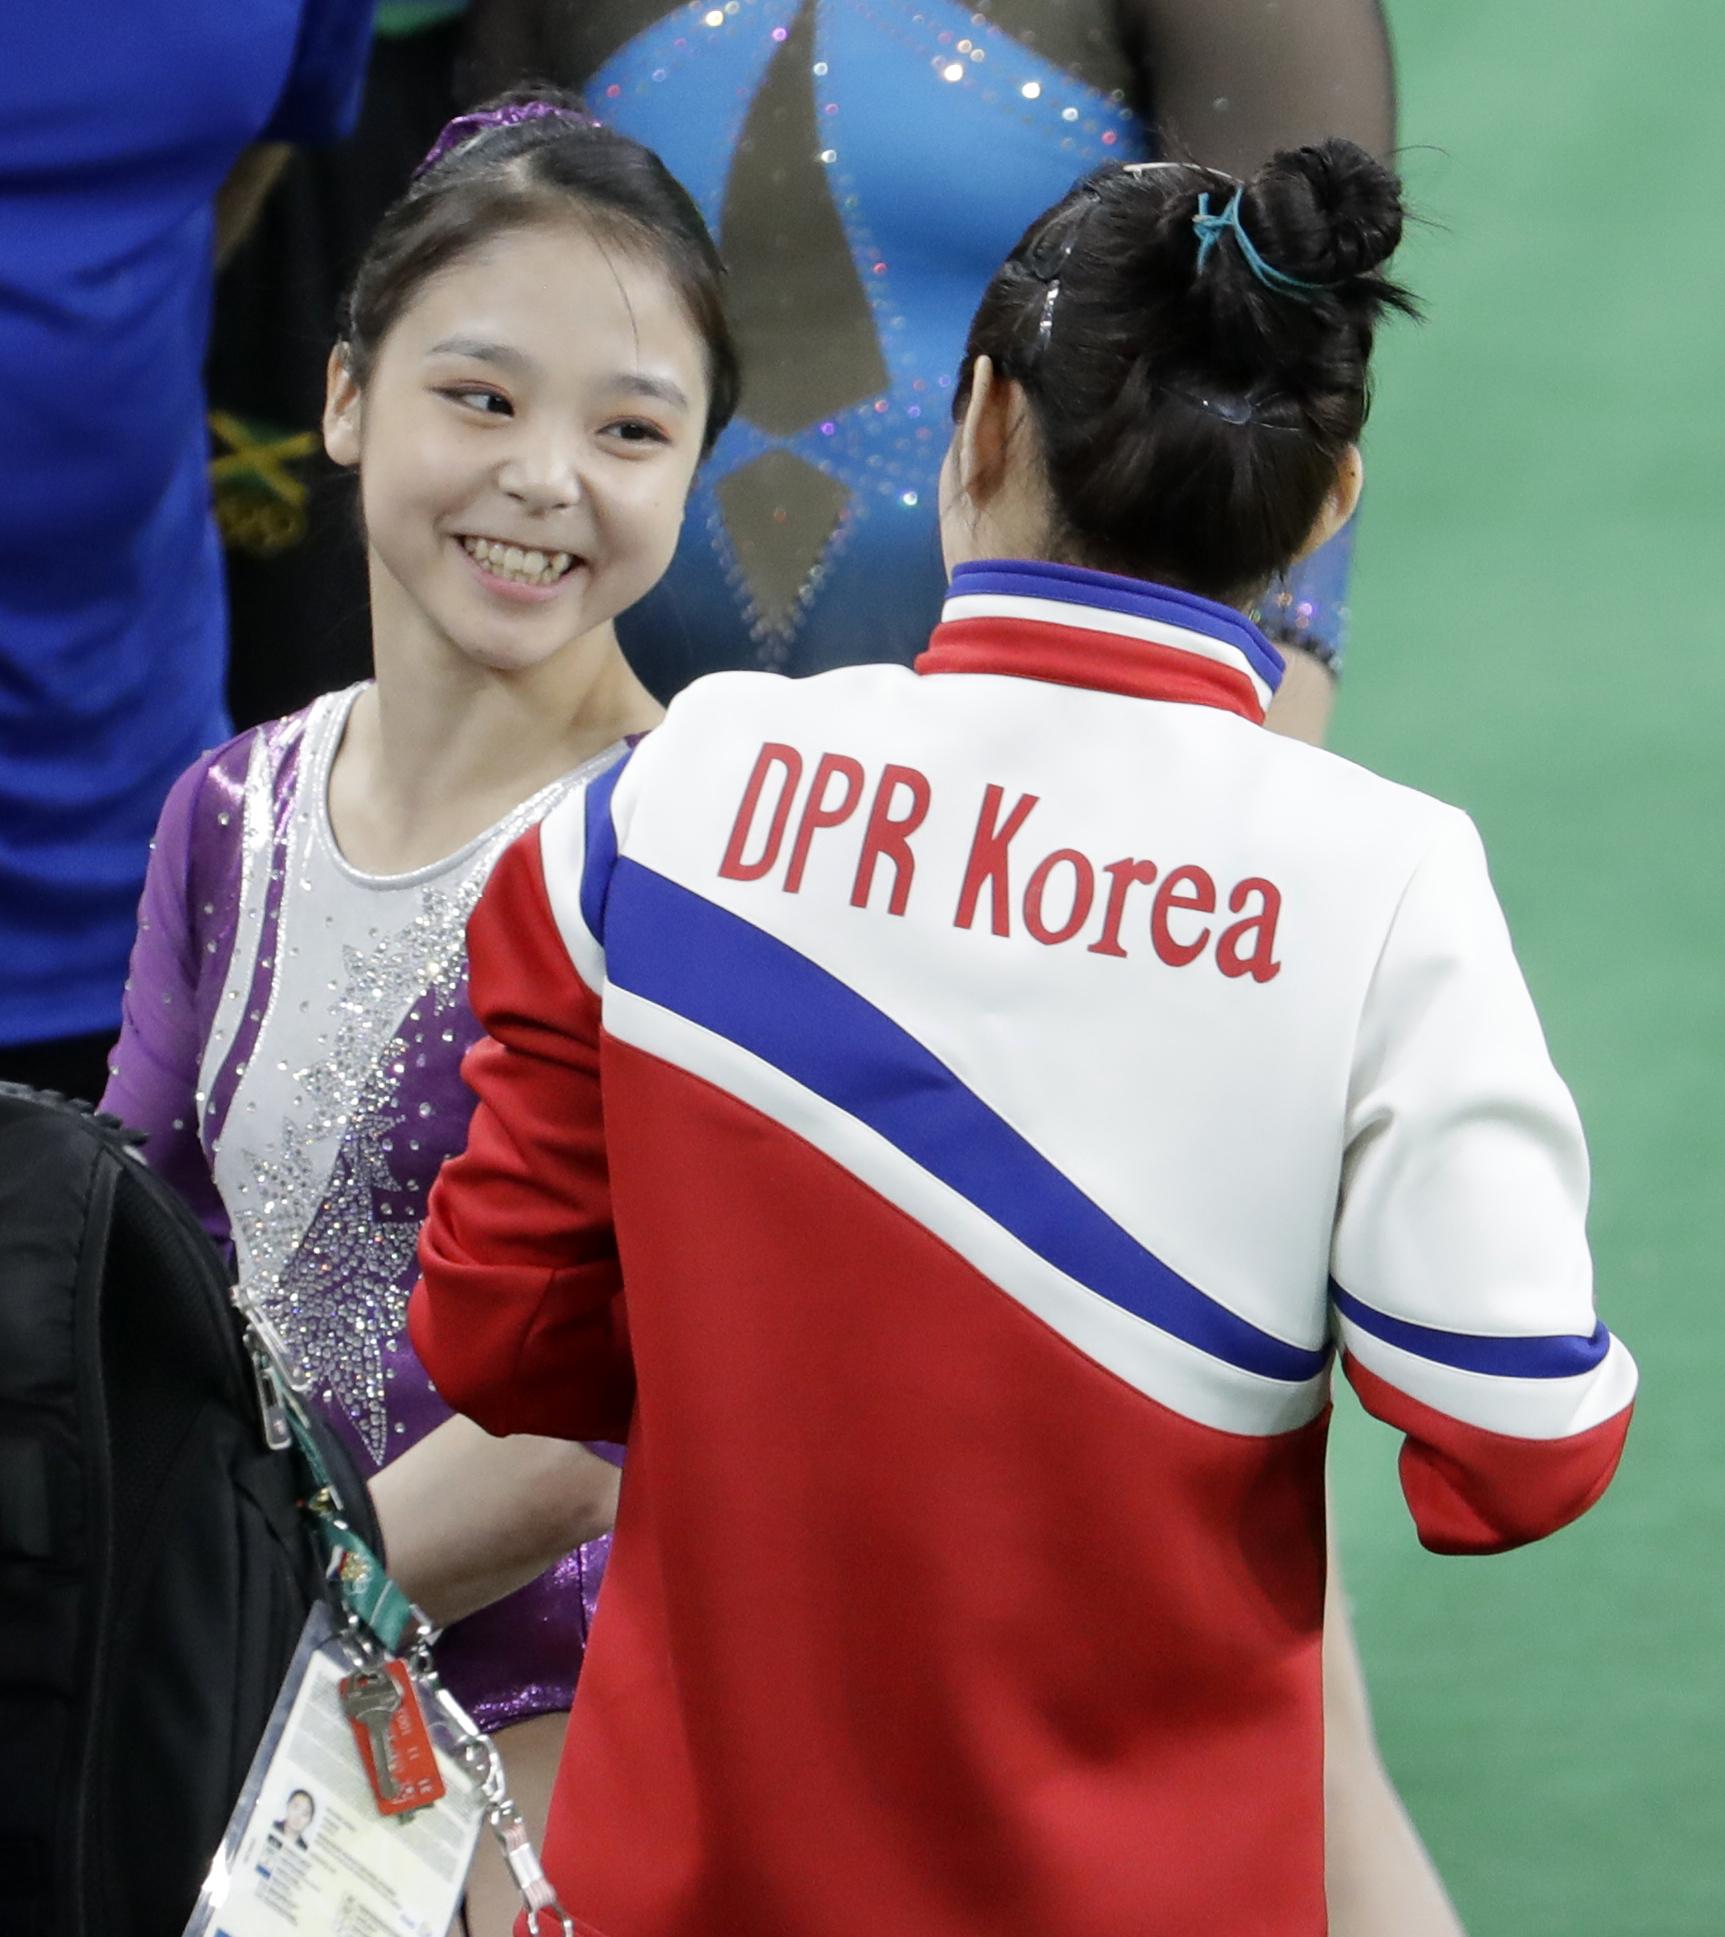 South Korea’s Lee Eun-ju, left, shares a moment with North Korea’s Hong Un Jong before requesting a selfie